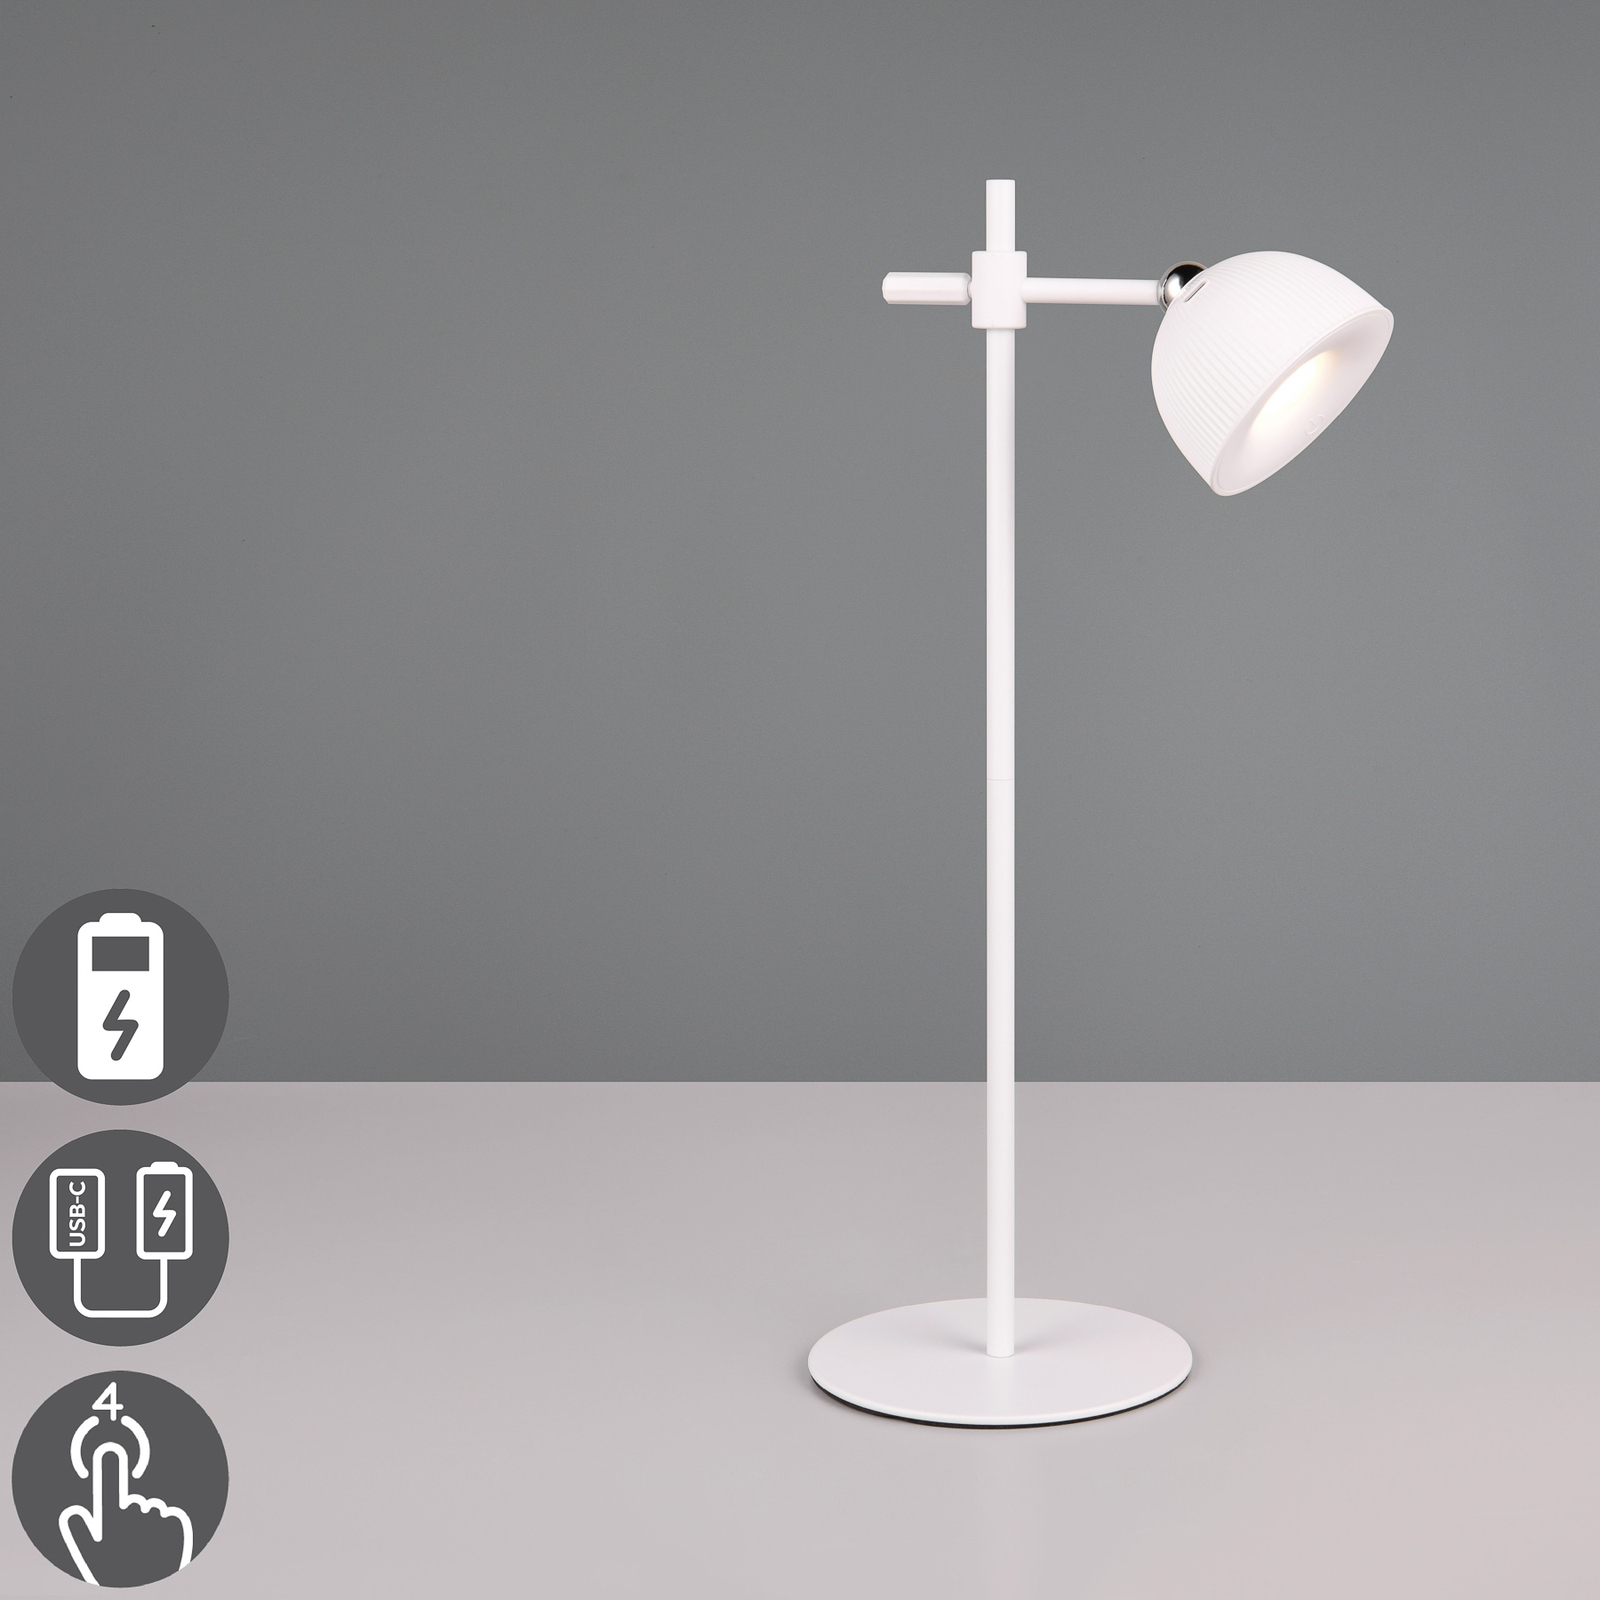 Maxima LED tafellamp, wit, hoogte 41 cm, kunststof